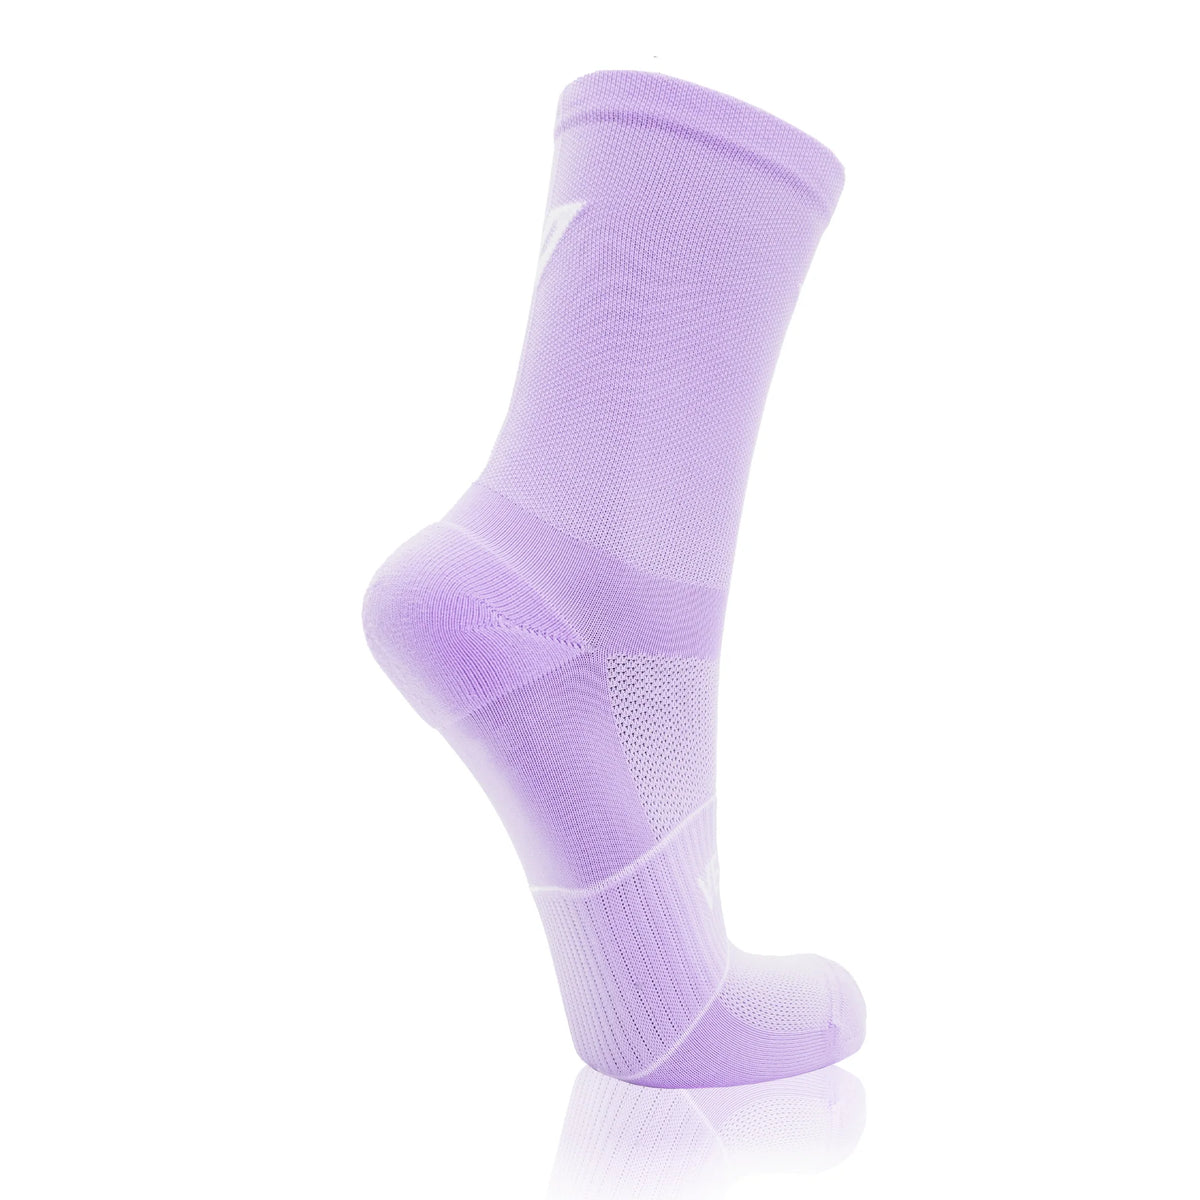 Versus Classic Lilac Active Socks